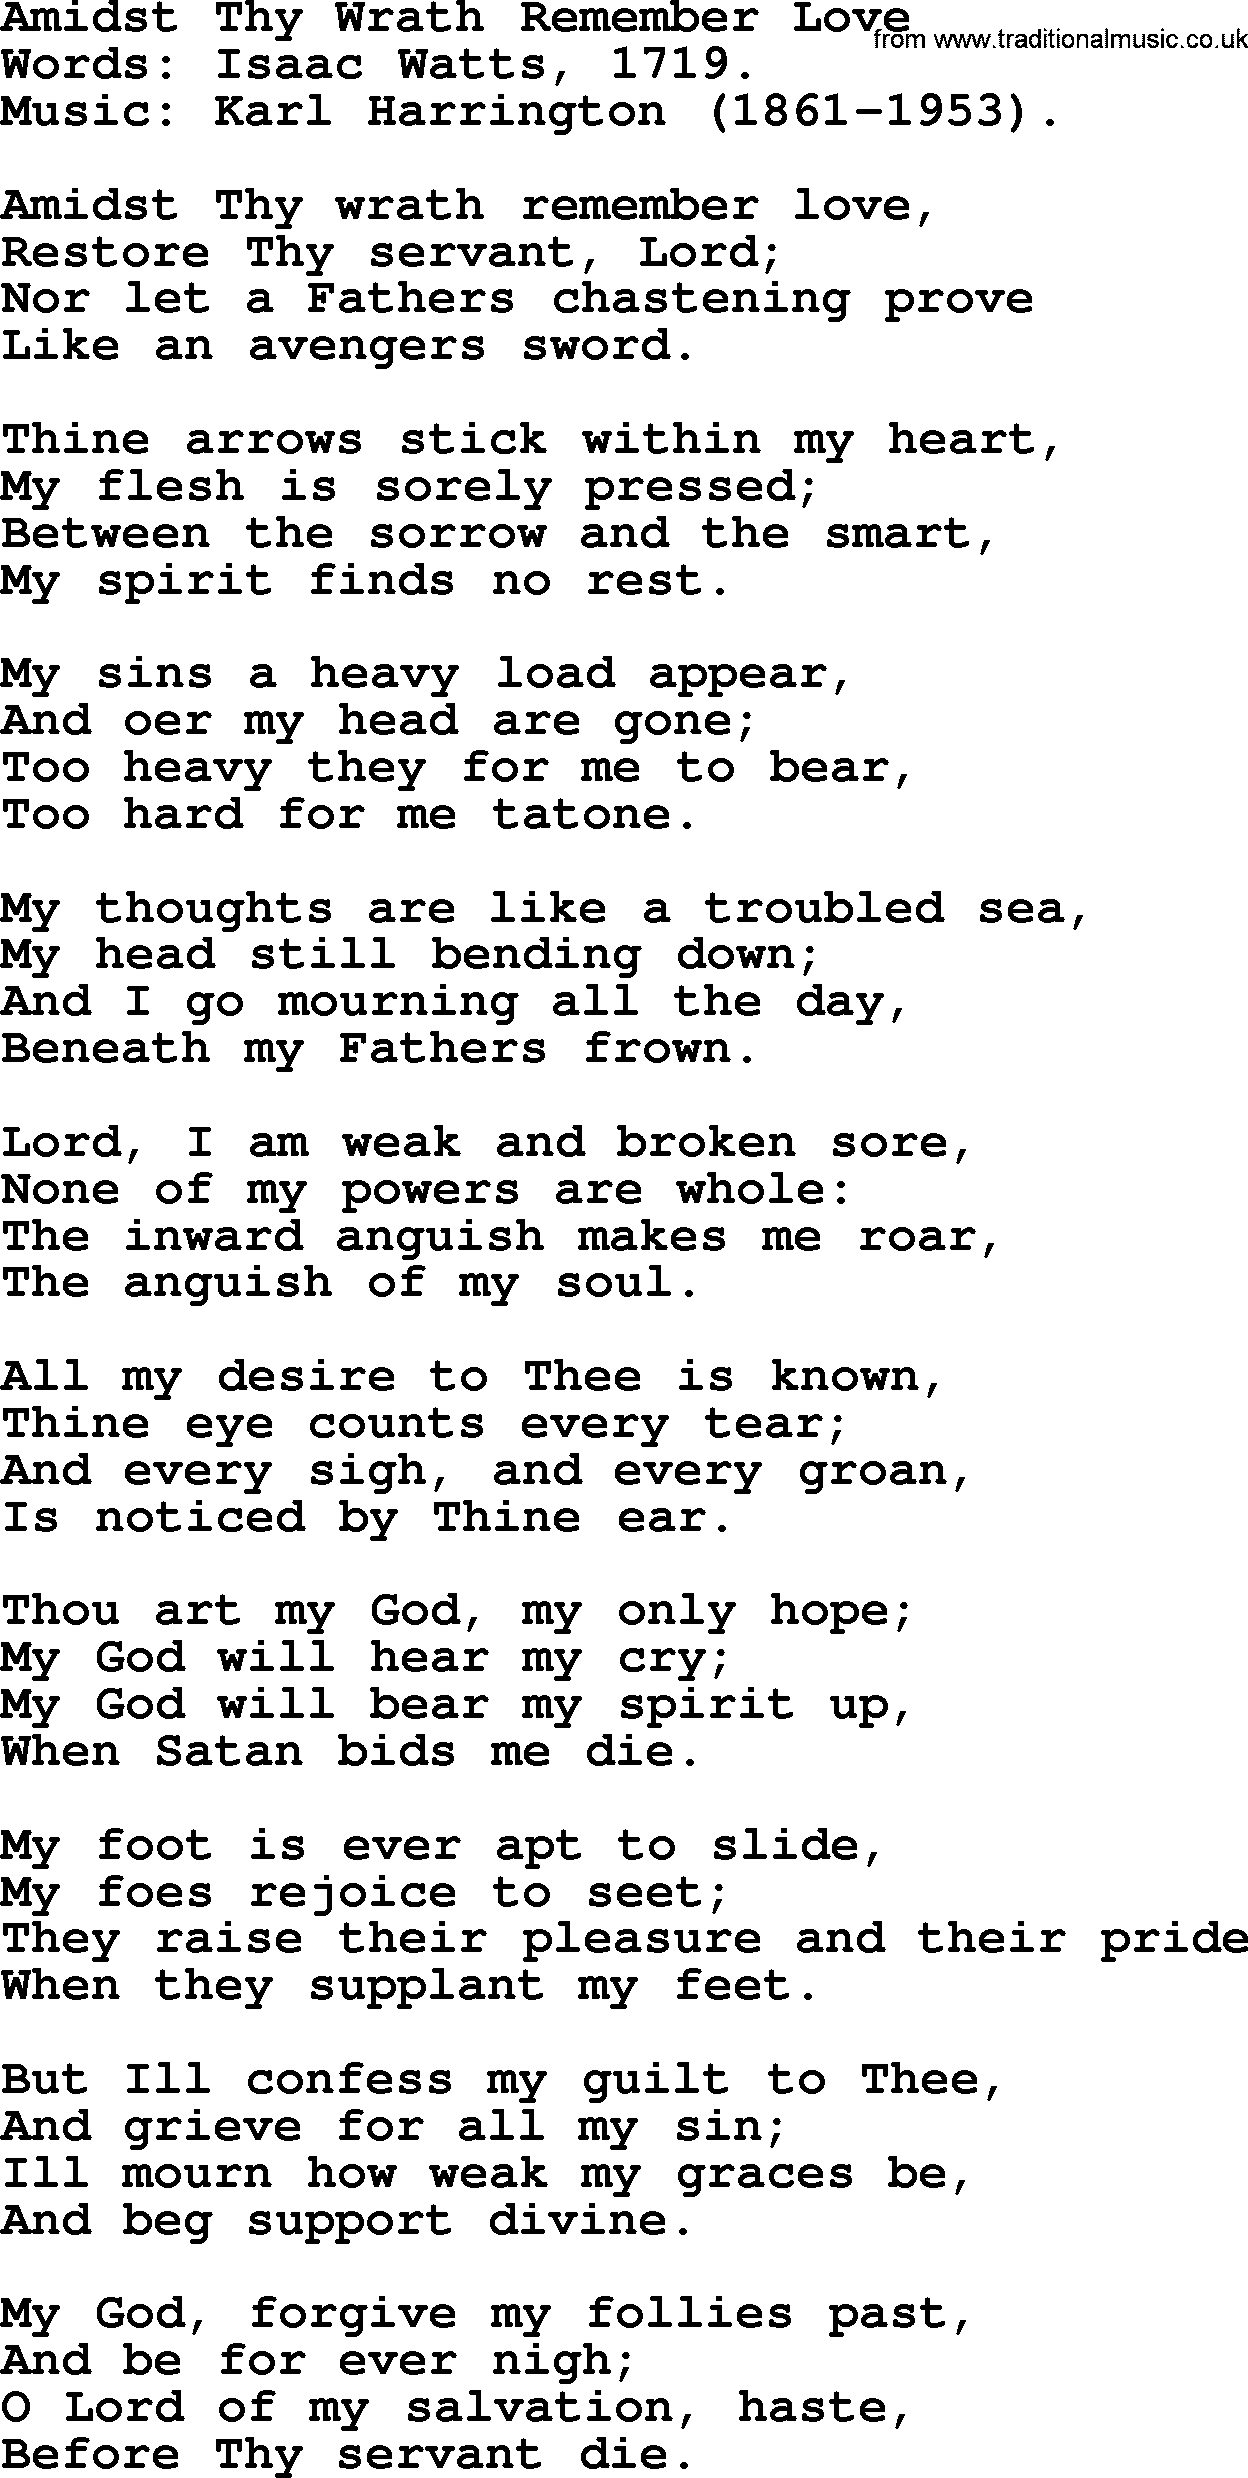 Isaac Watts Christian hymn: Amidst Thy Wrath Remember Love- lyricss